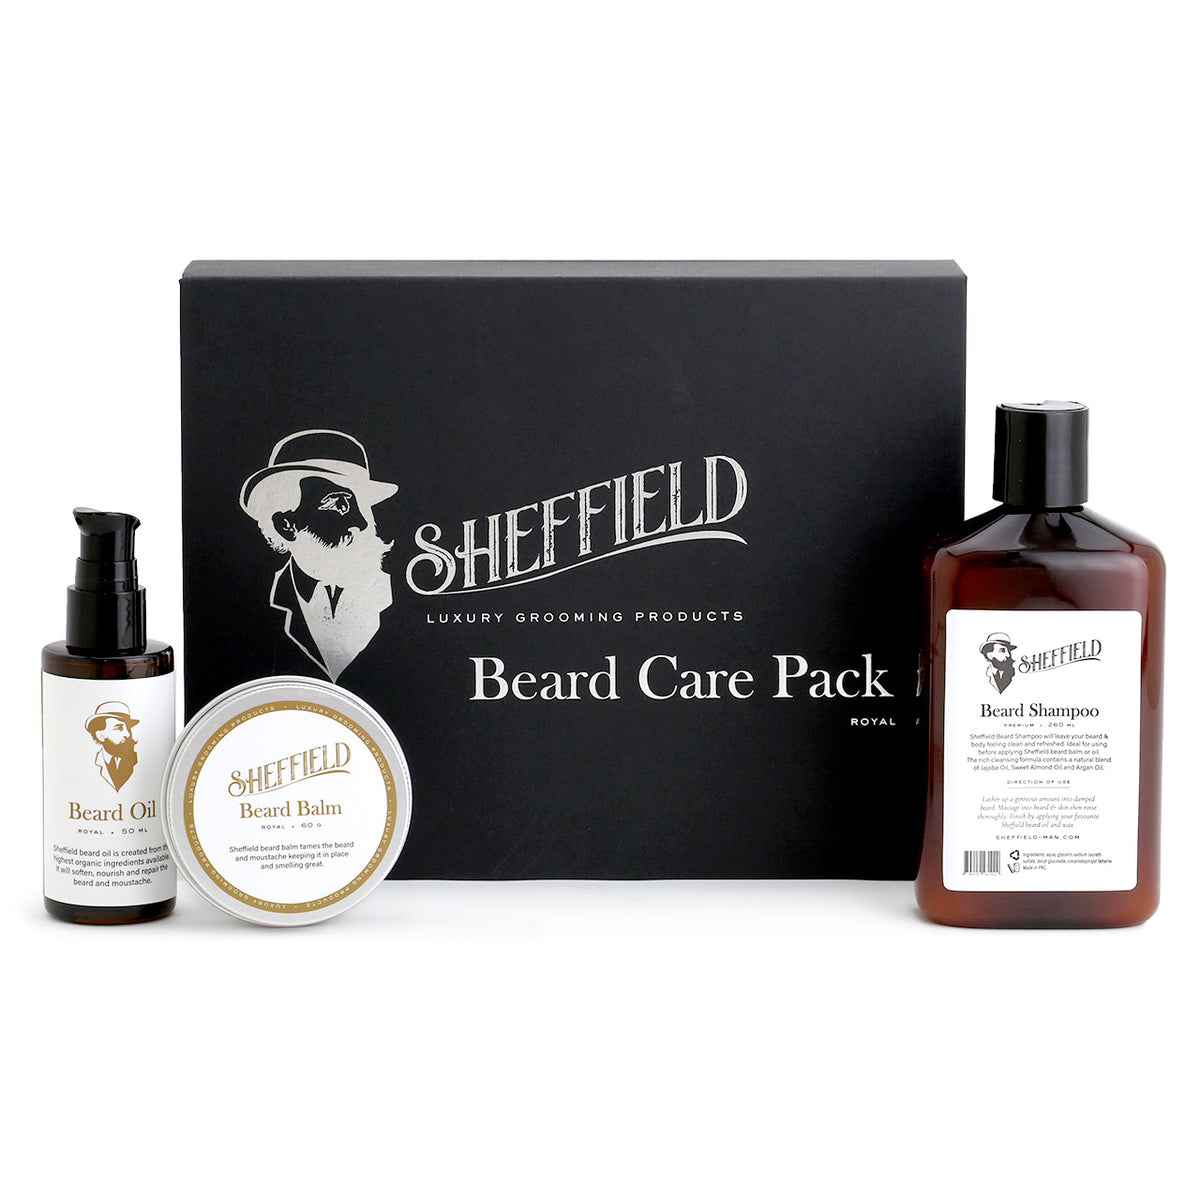 Sheffield Beard Care Gift Pack, with Beard Oil, Beard Balm and Beard Shampoo - Royal